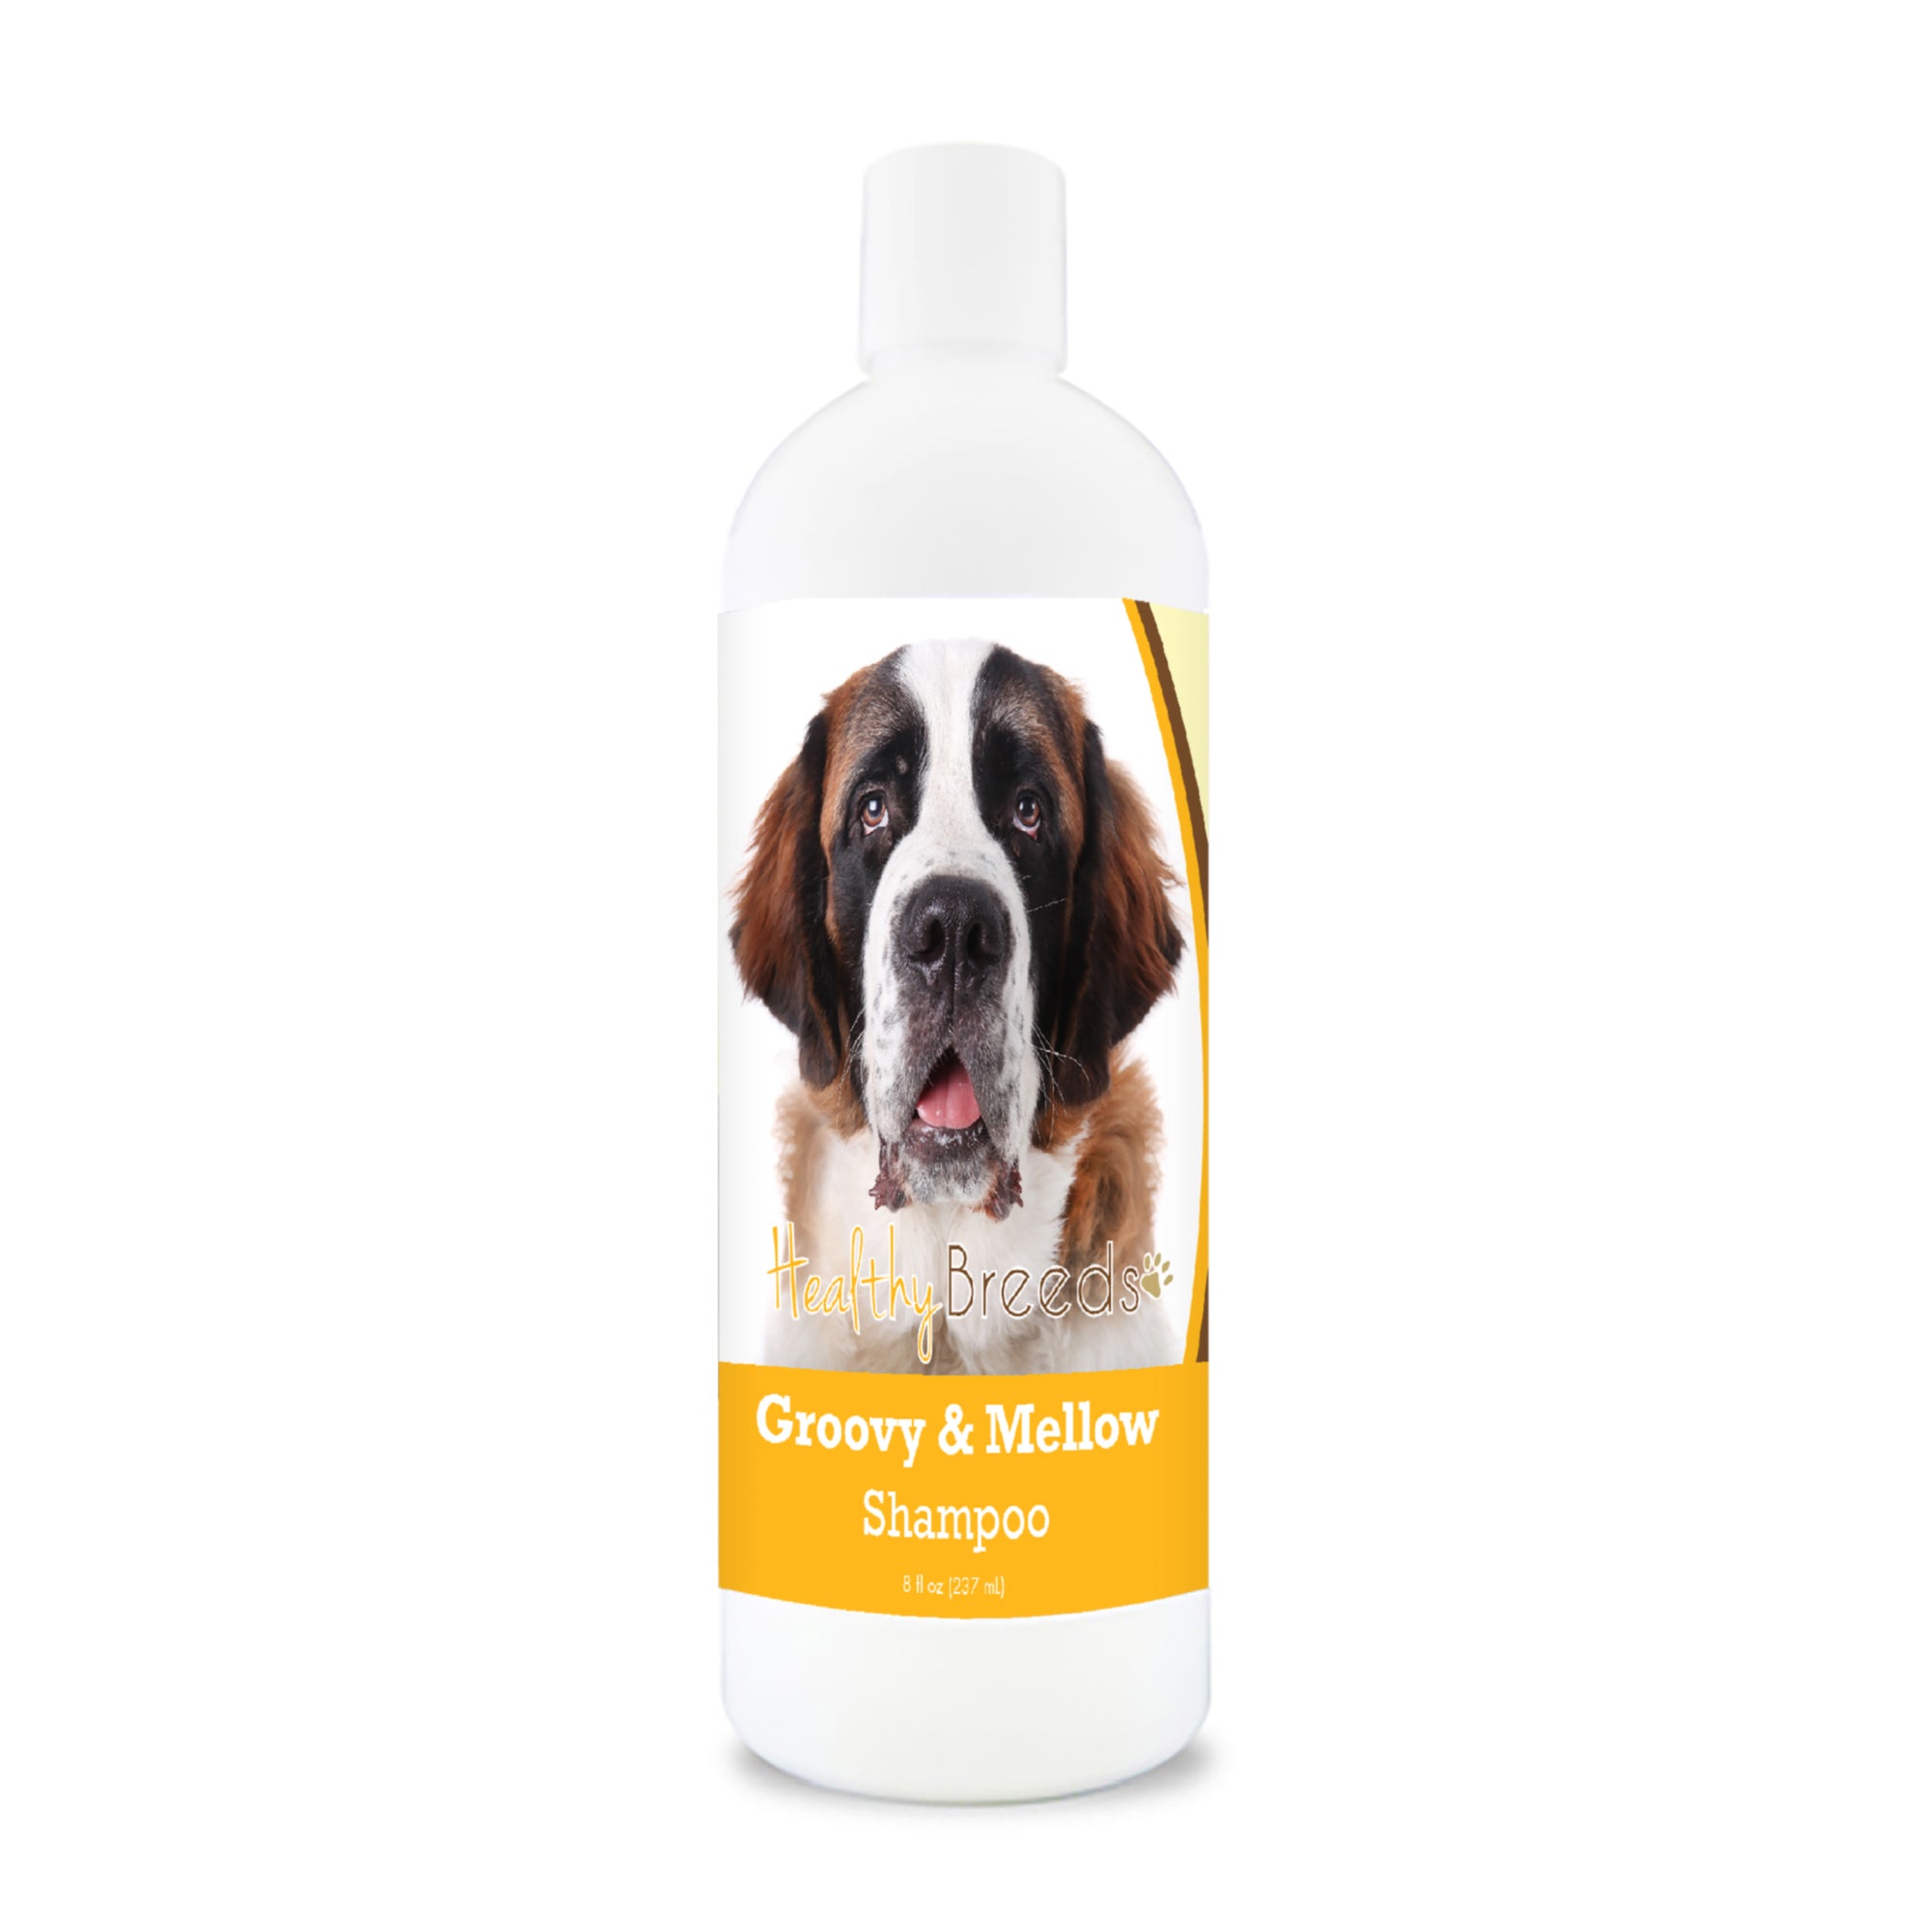 Saint Bernard Groovy & Mellow Shampoo 8 oz